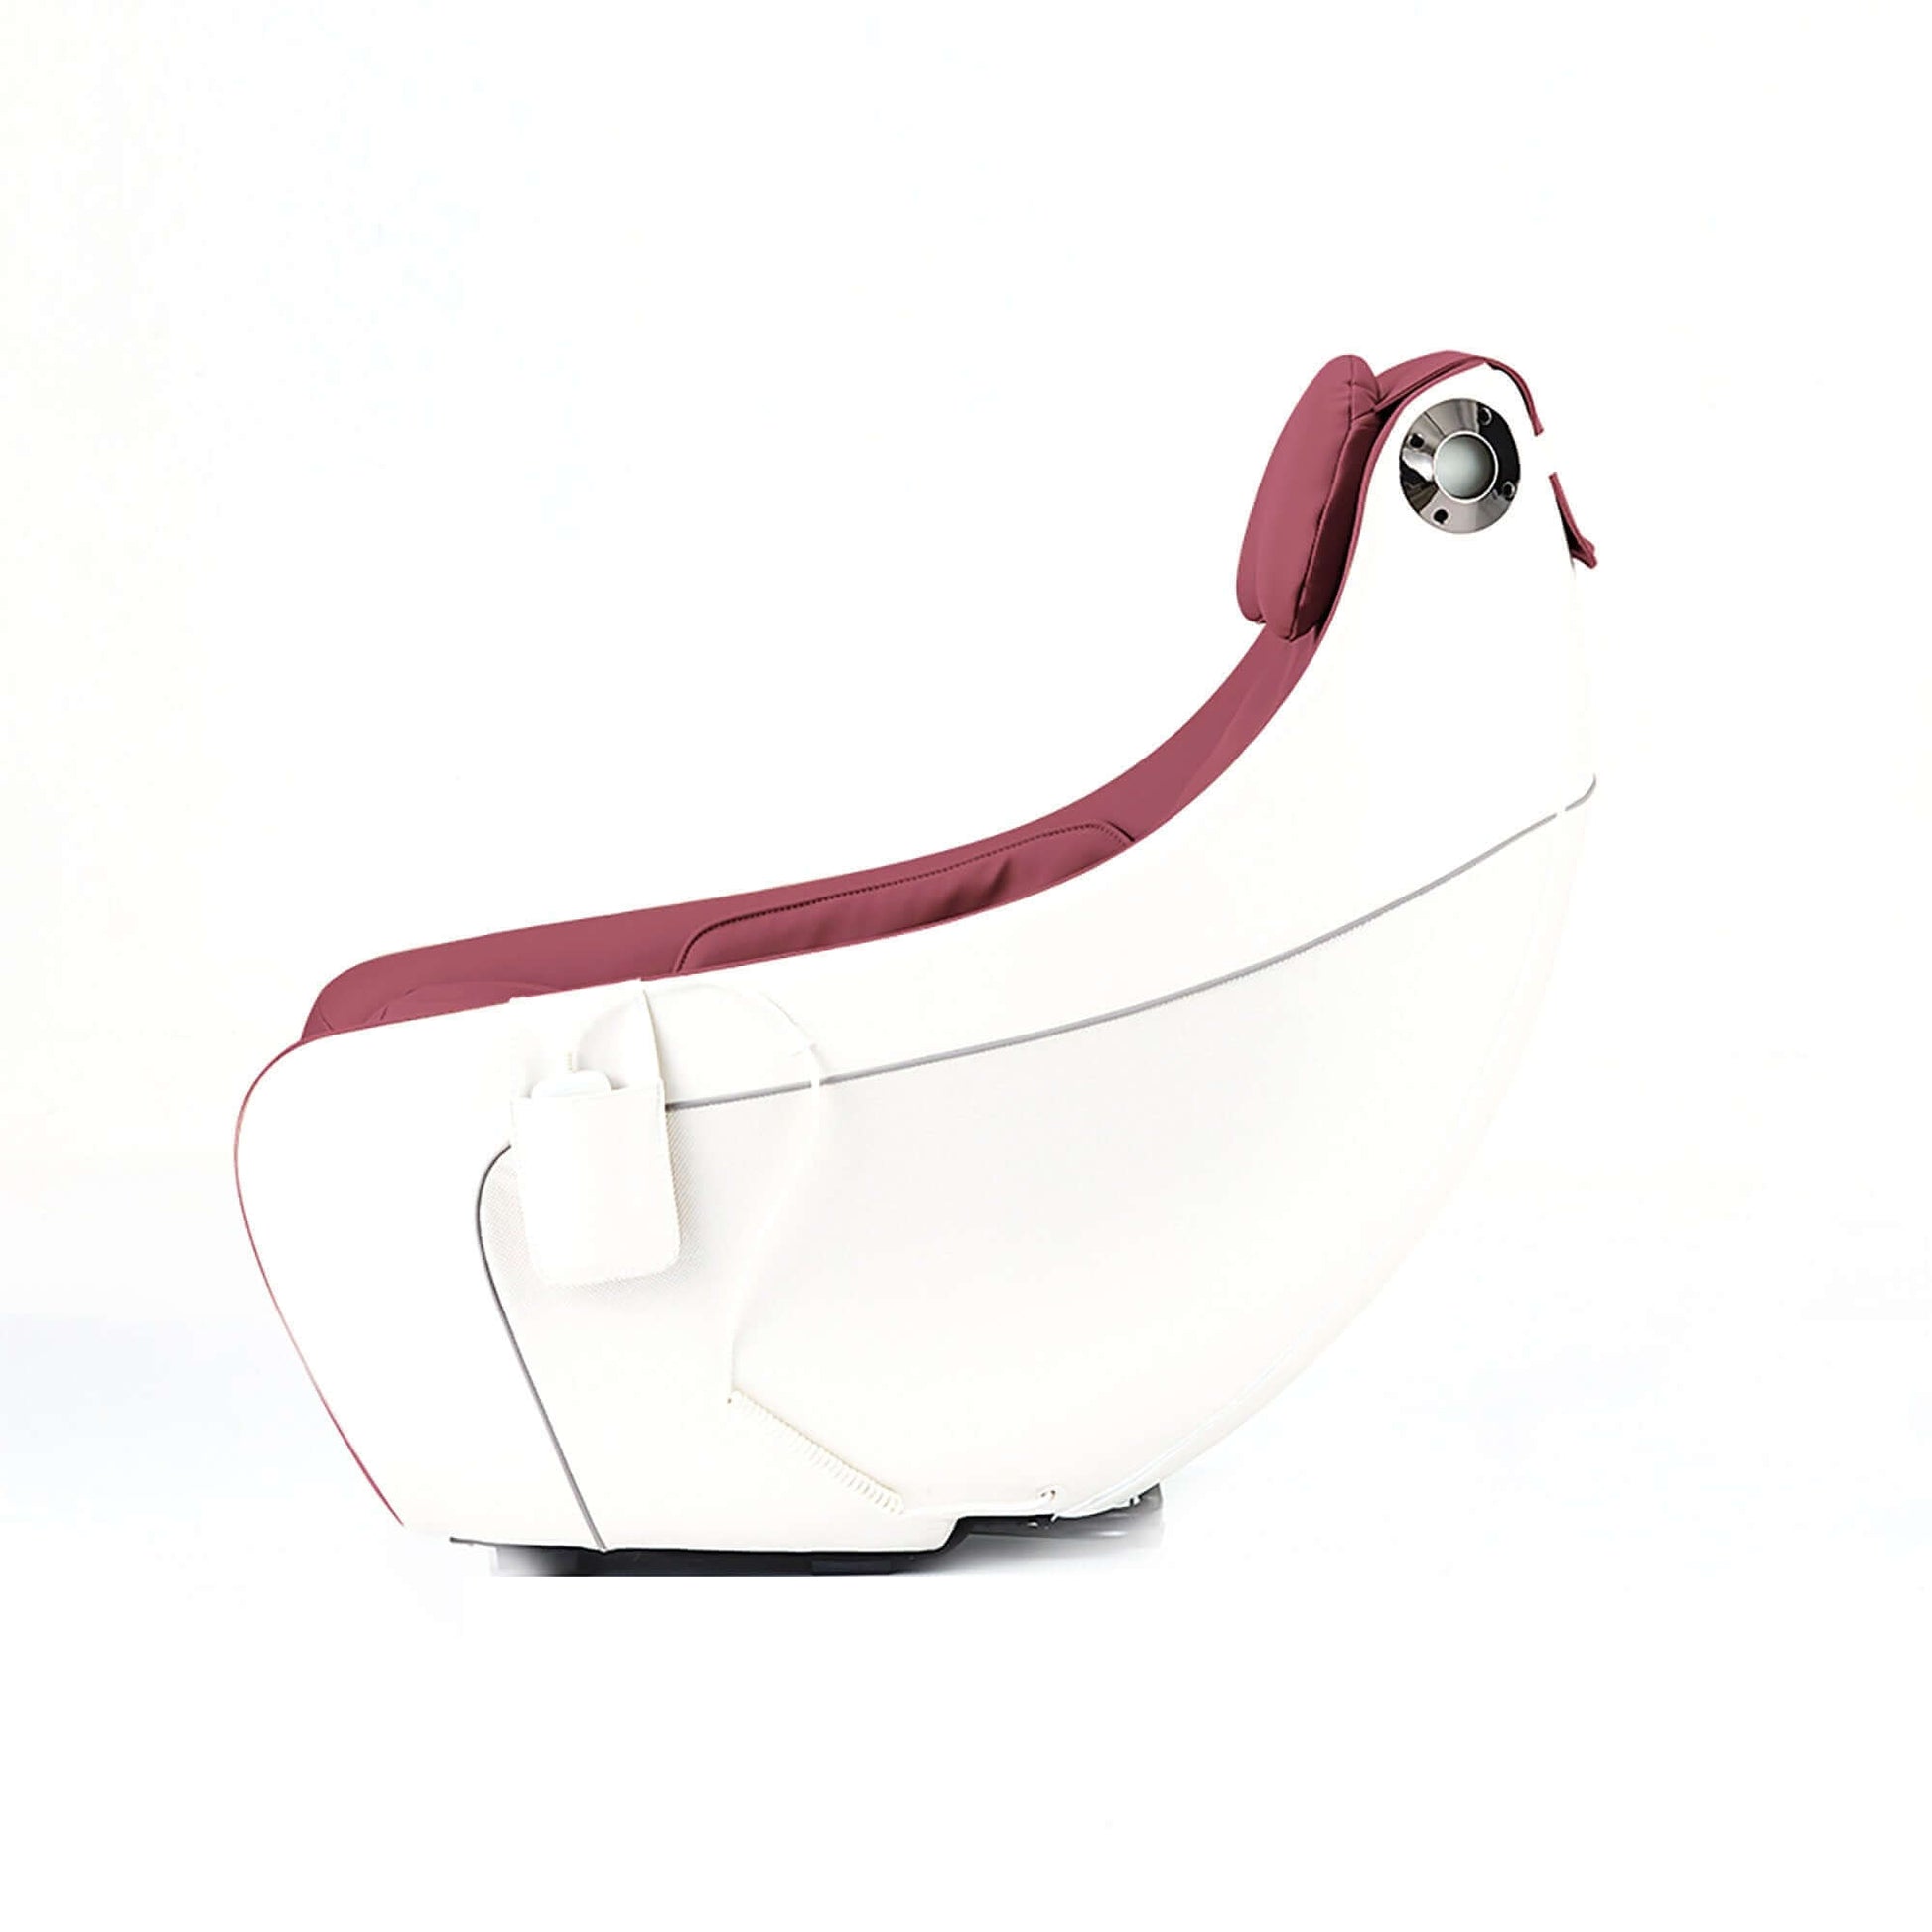 Synca Wellness CirC - Premium SL Track Heated Massage Chair - Electric Massaging Chairs